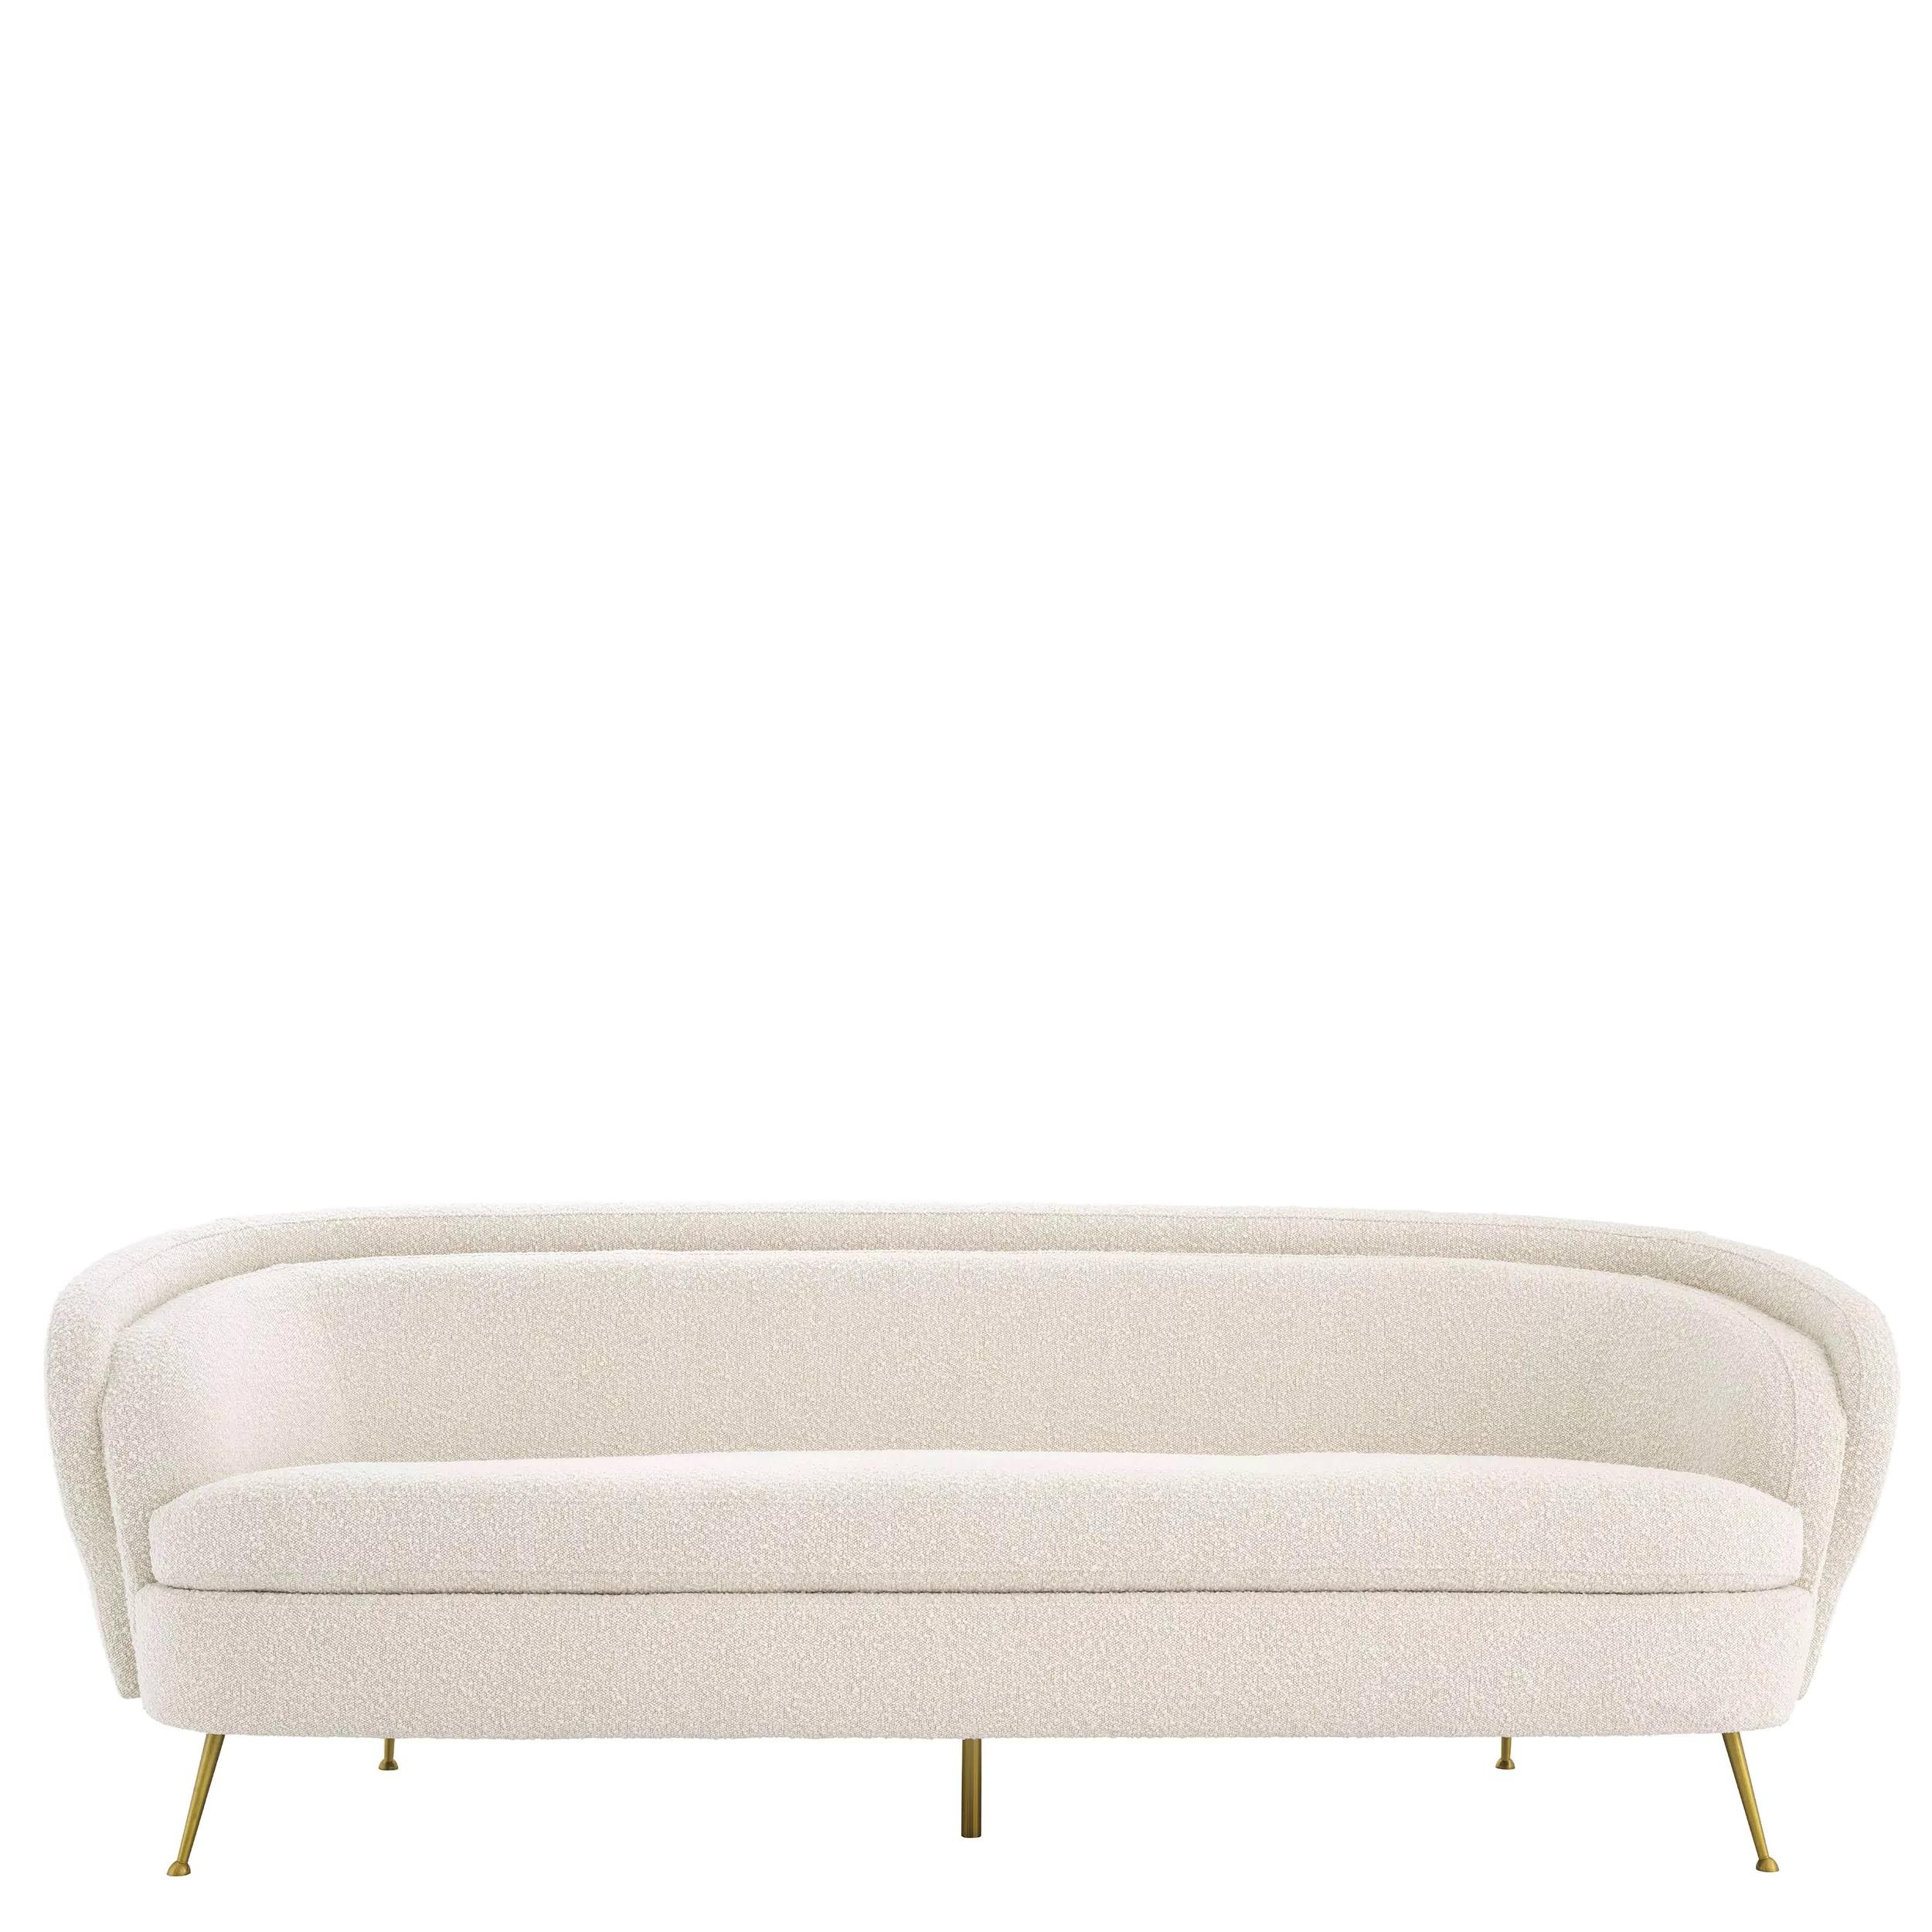 Contemporary 1950s Italian Design Style Bouclé Fabric And Brass Feet Sofa